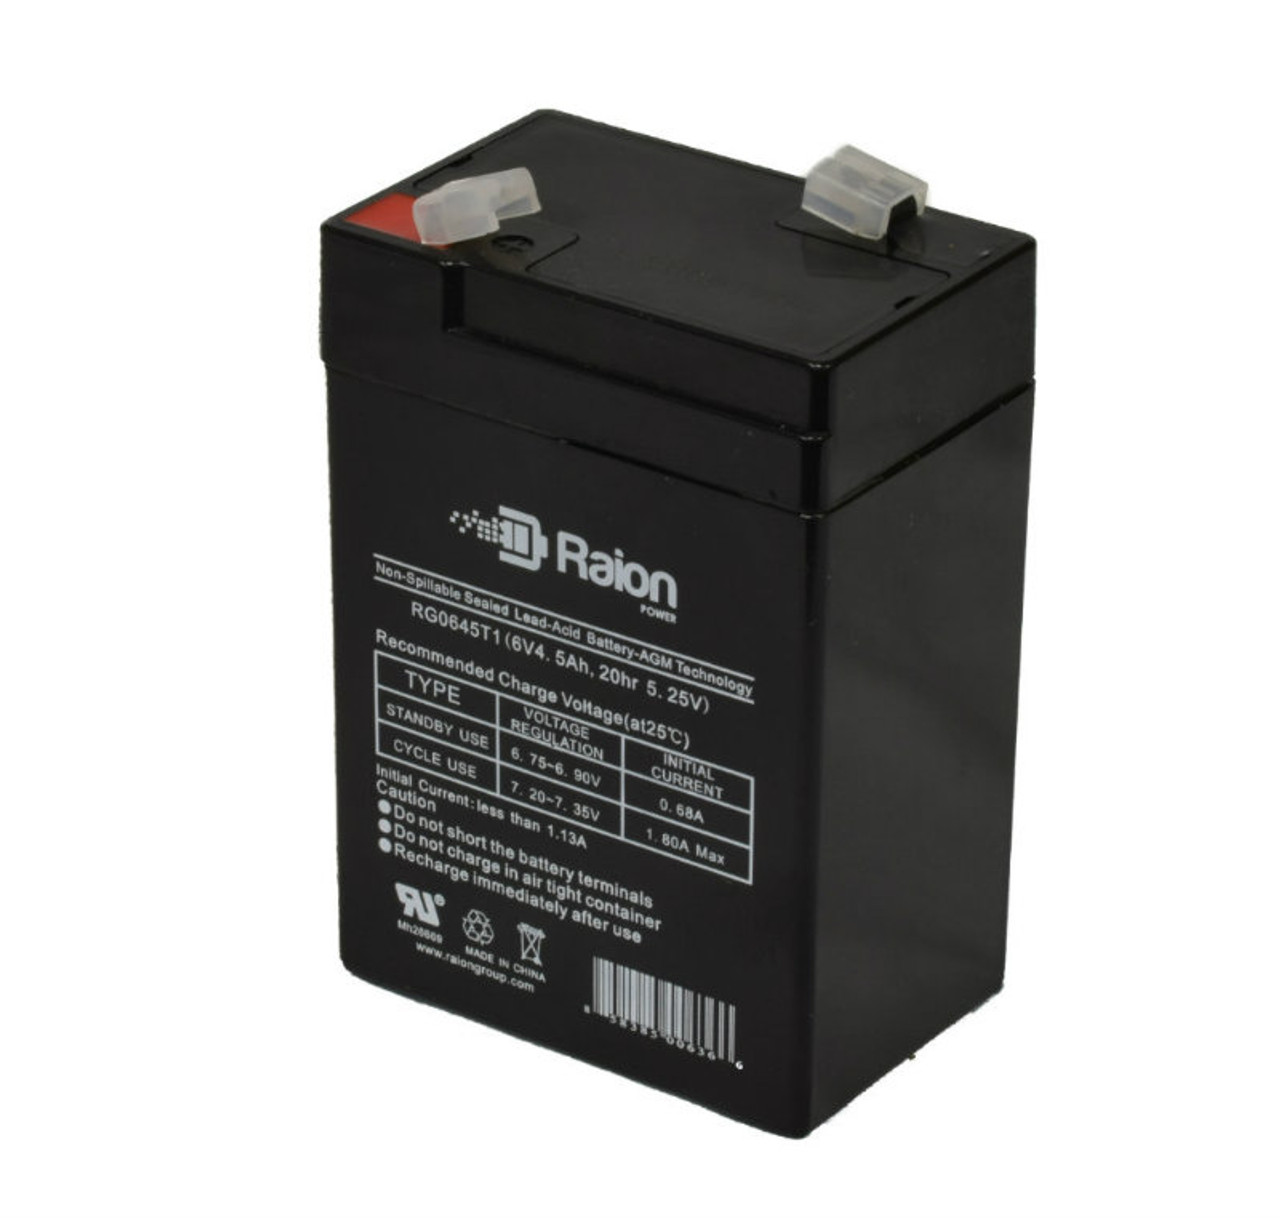 Raion Power RG0645T1 6V 4.5Ah Replacement Battery Cartridge for Sentry Lite 640